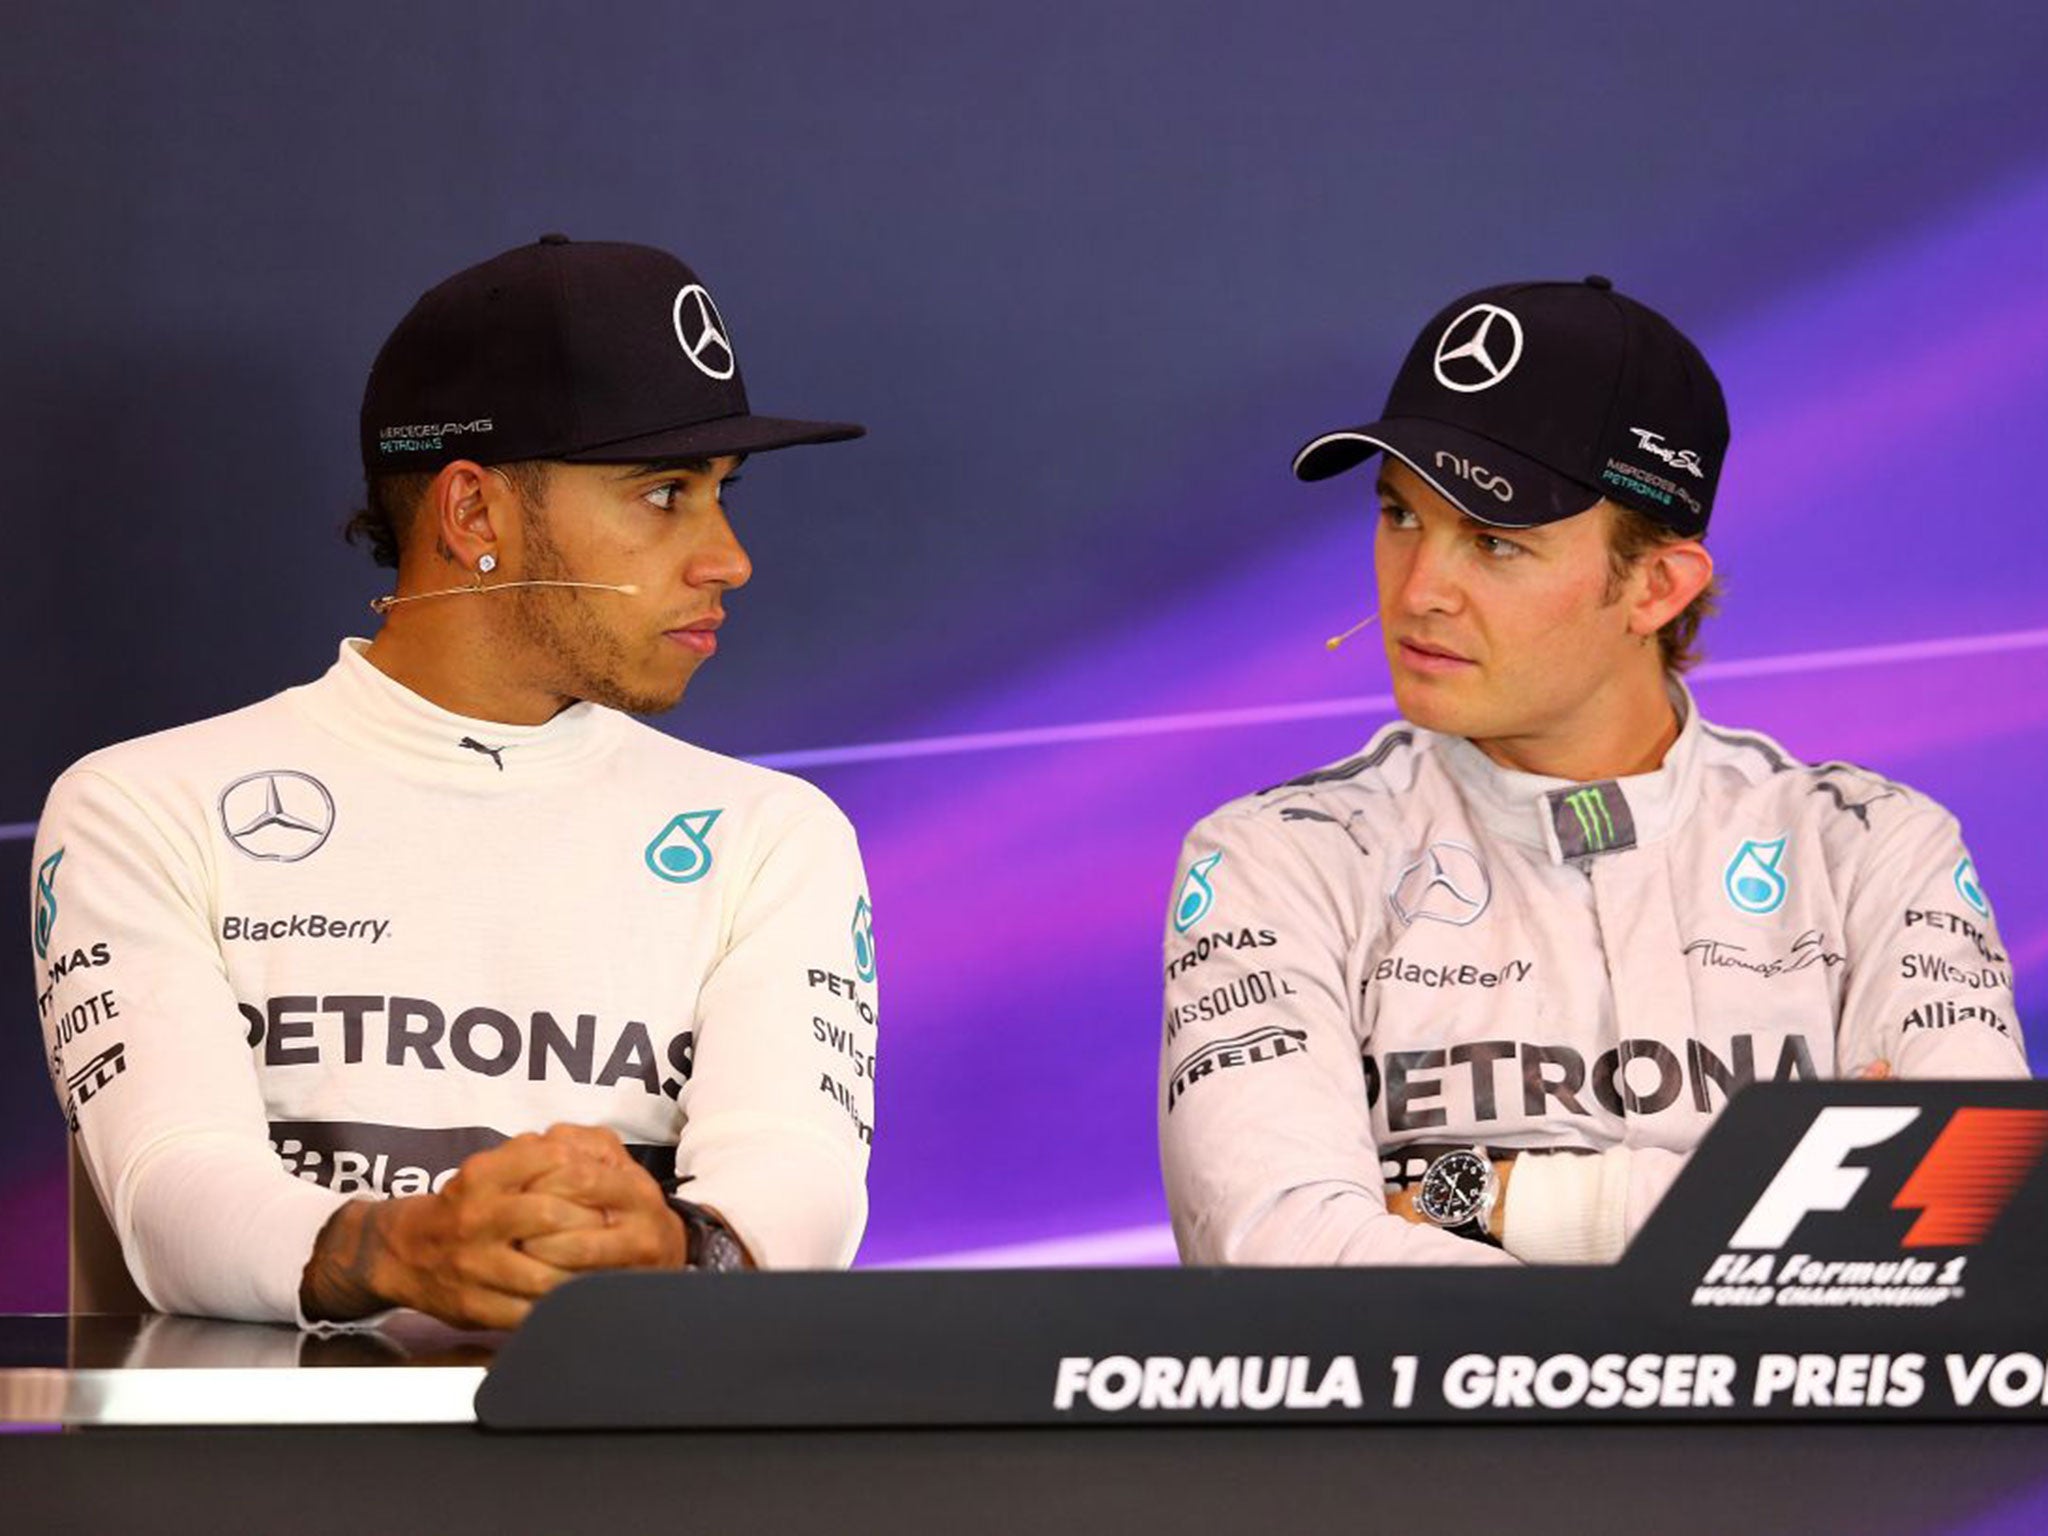 Mercedes team-mates Lewis Hamilton, left, and Nico Rosberg face a tense title run-in, with each seeking wins